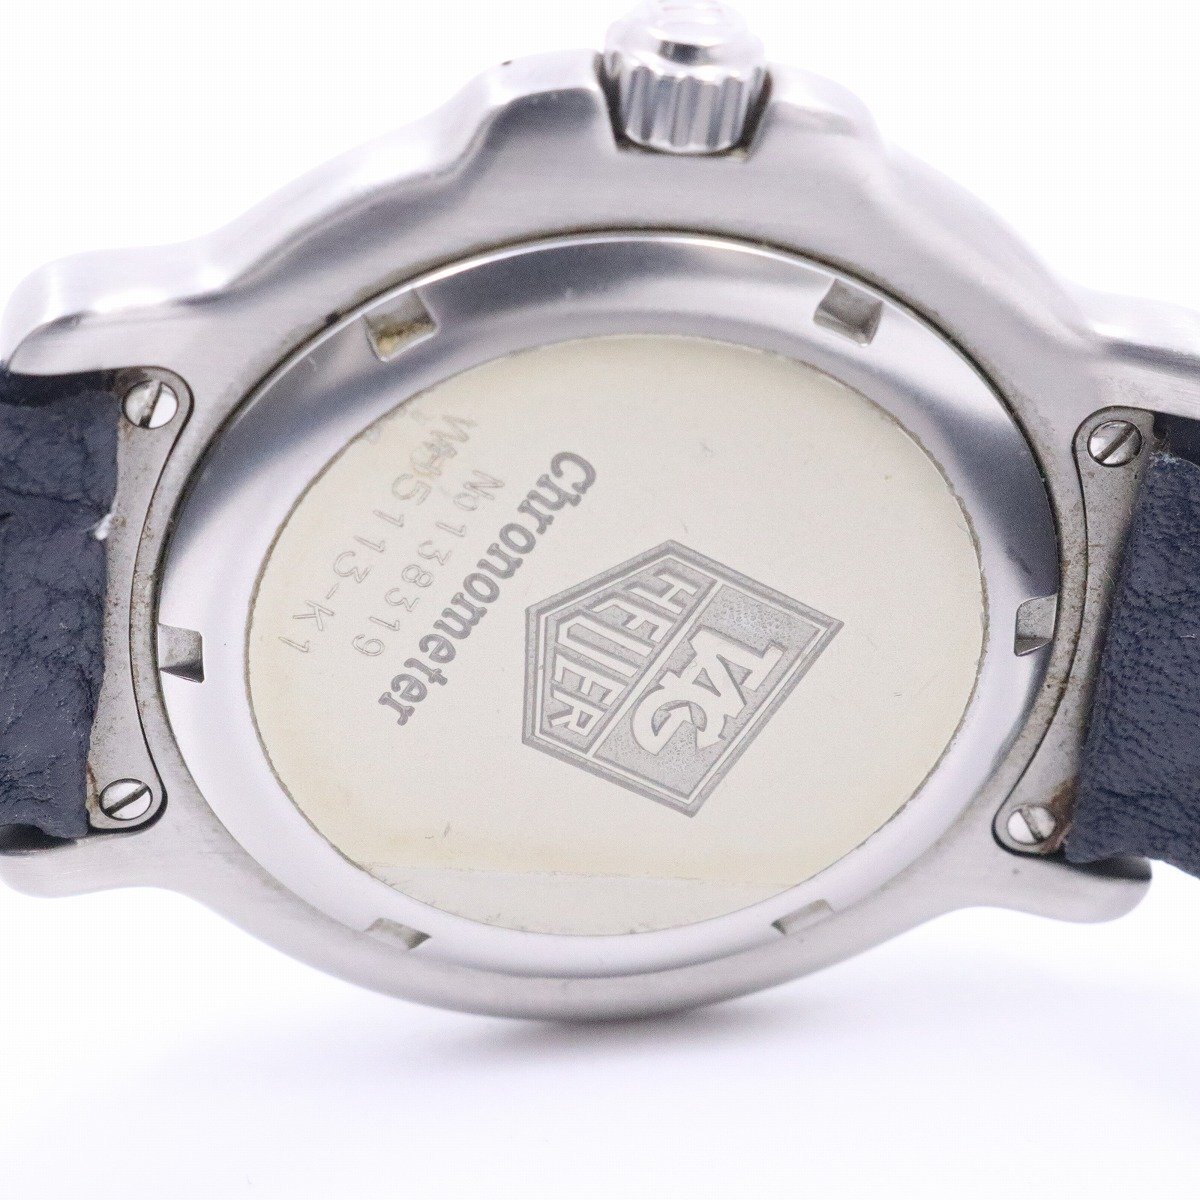  TAG Heuer 6000 Chrono meter self-winding watch men's wristwatch blue face original leather belt WH5113[... pawnshop ]